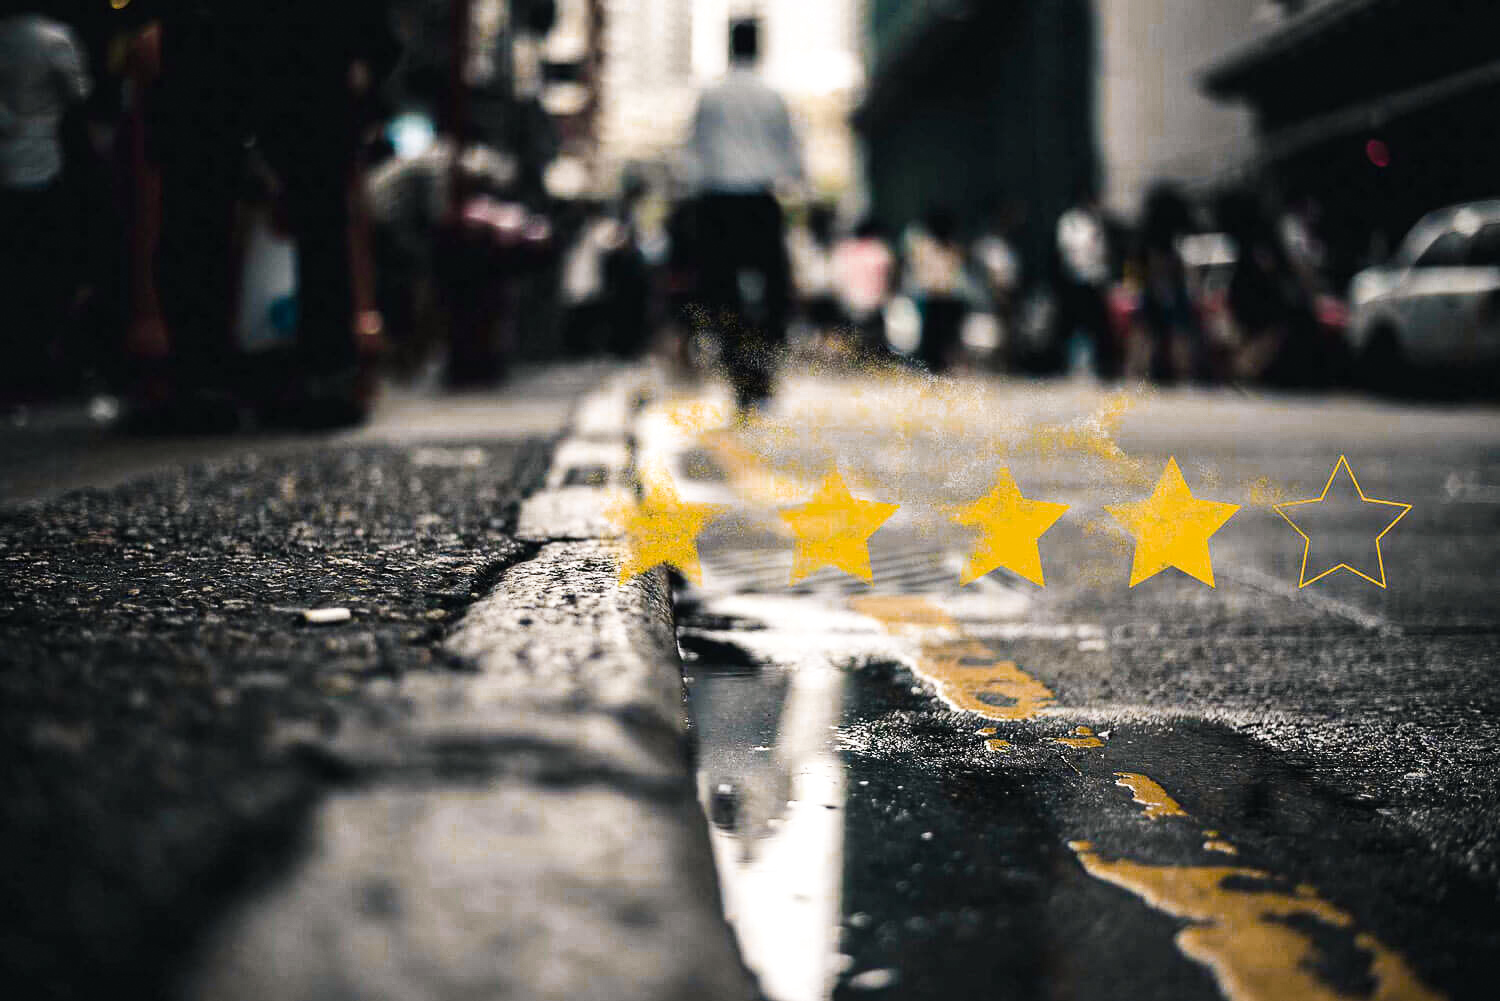 Scrap trade - we use rating and reviews stars